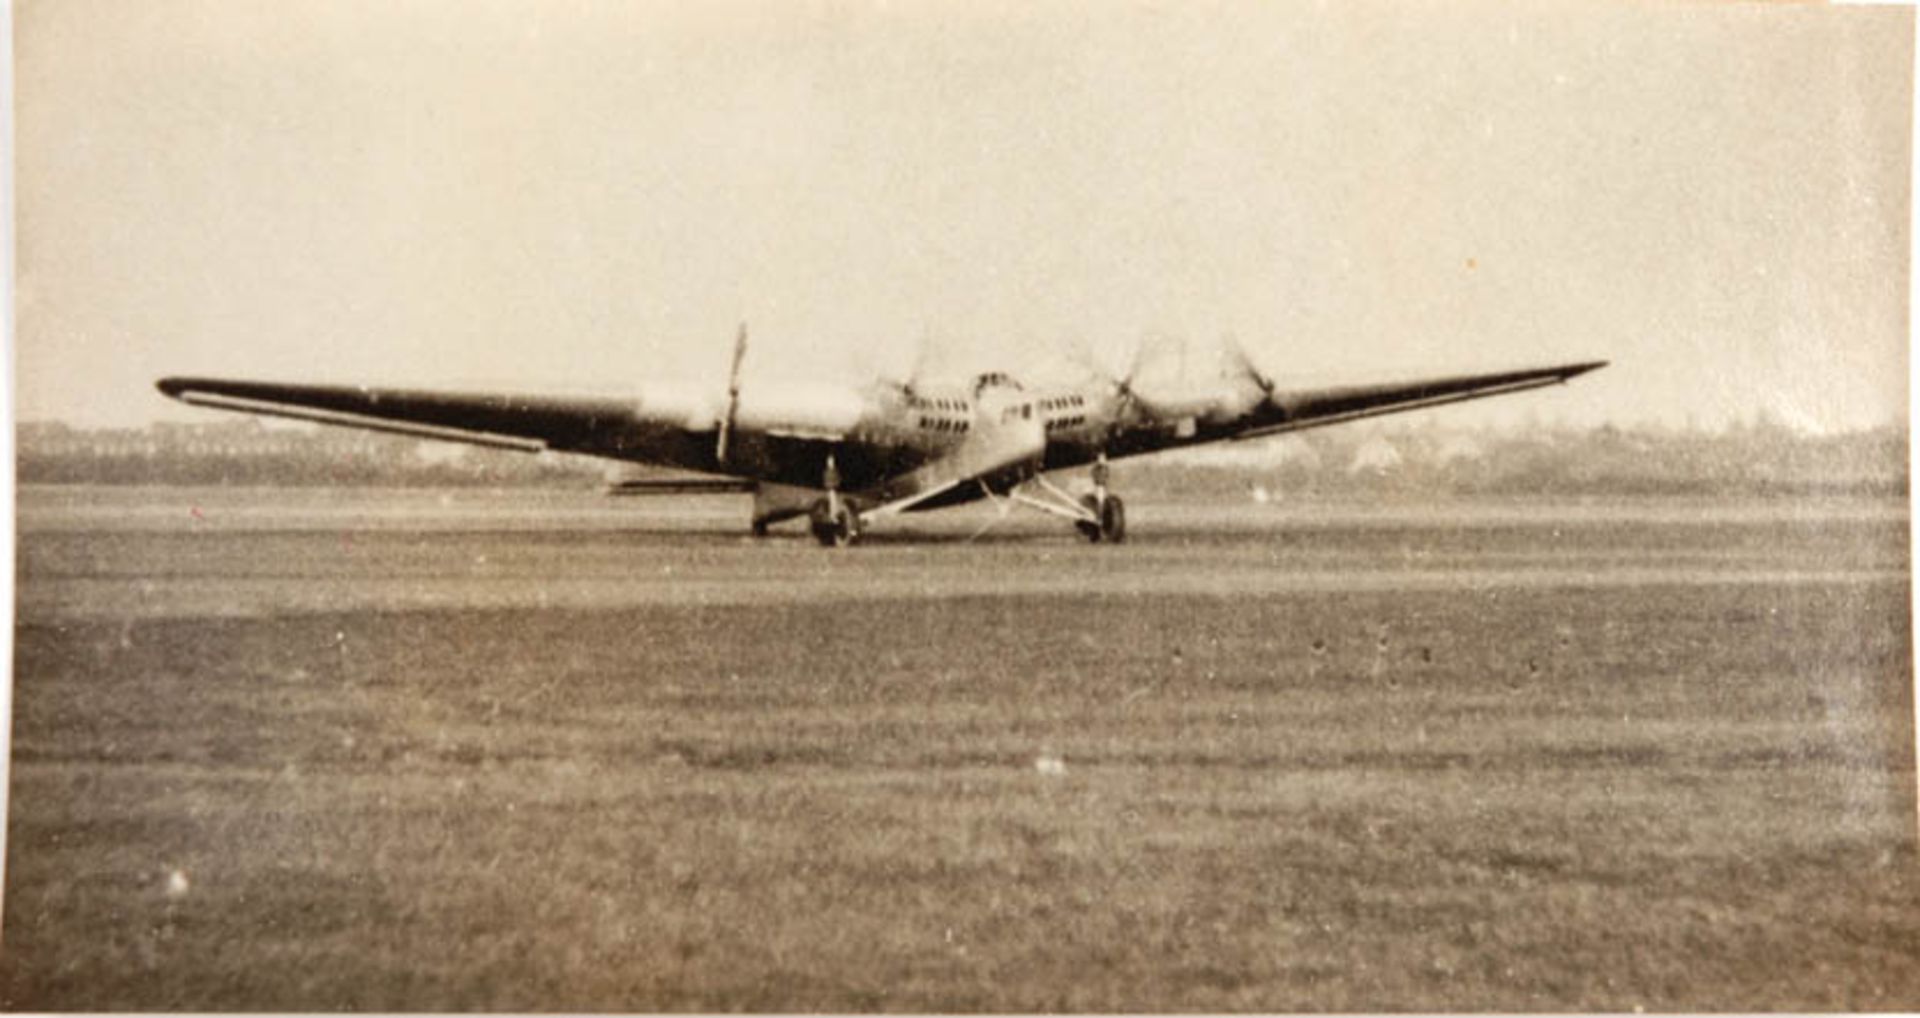 PRESSEFOTO "Junkers G-38", startbereit auf Flugfeld Dessau, Rs. Stempel "P & A Photo" sowie tls.